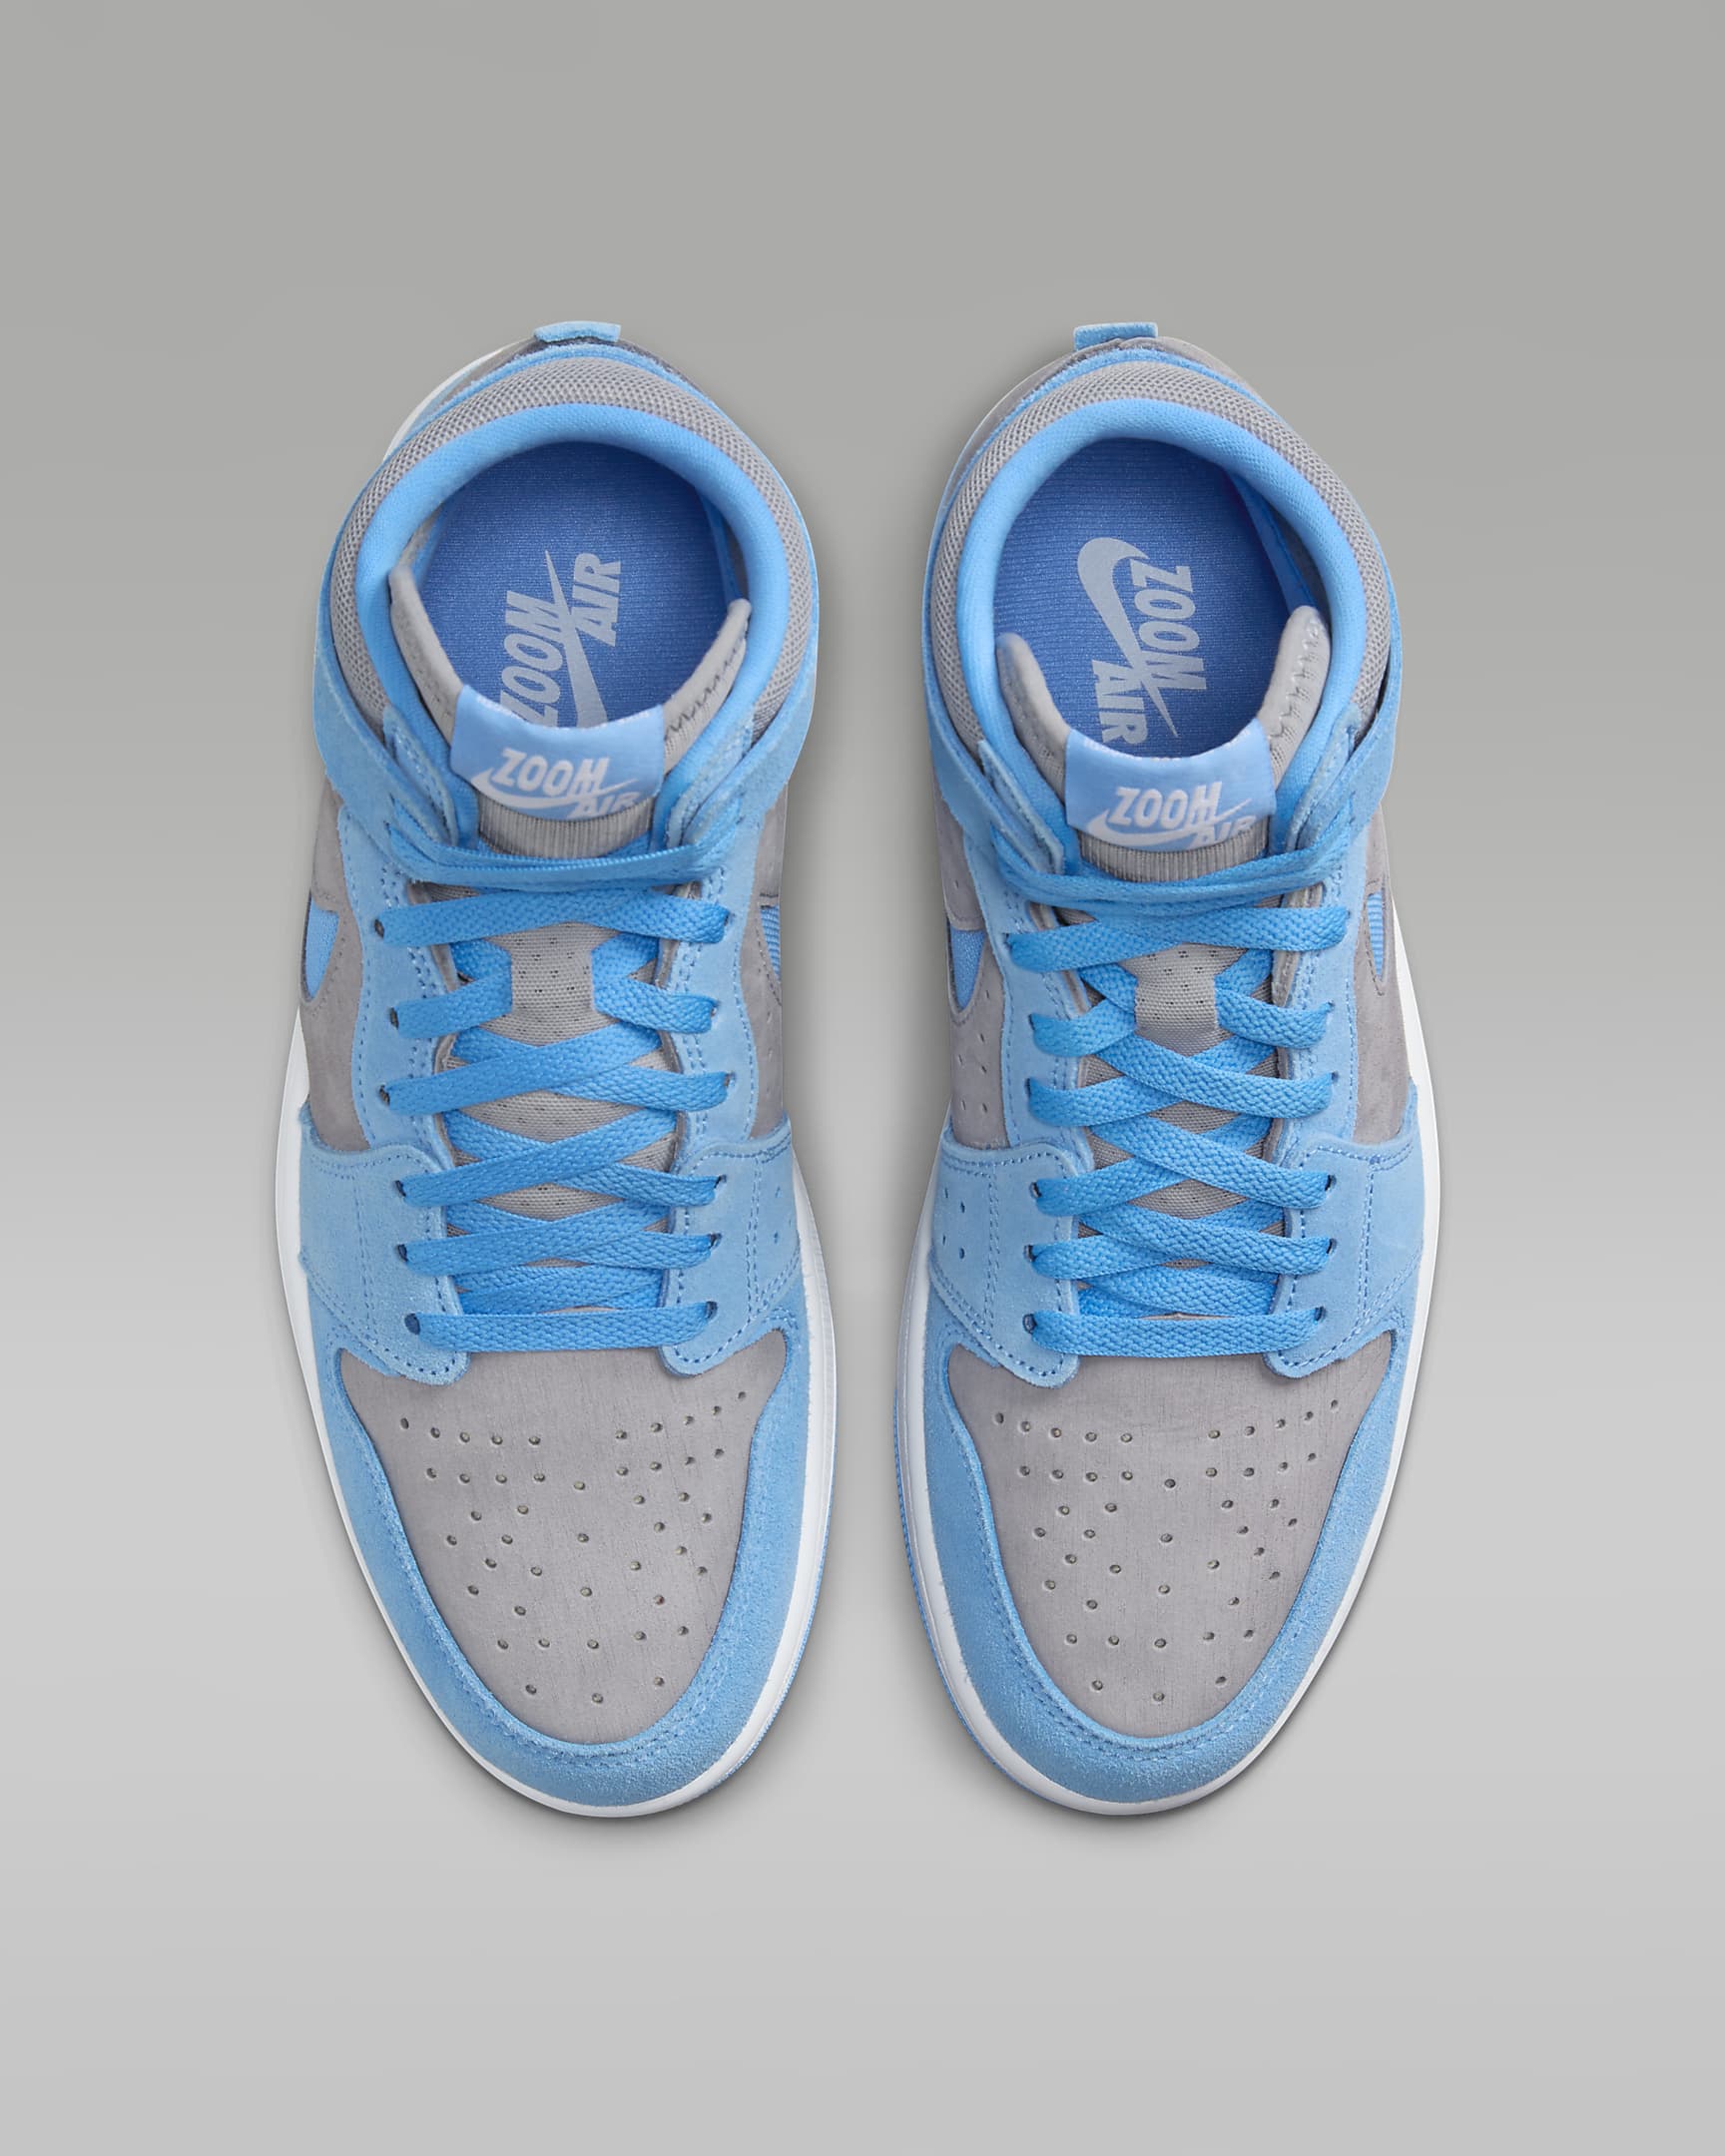 Get Ready to Soar: Air Jordan 1 Zoom CMFT 2 Men’s Shoes Review